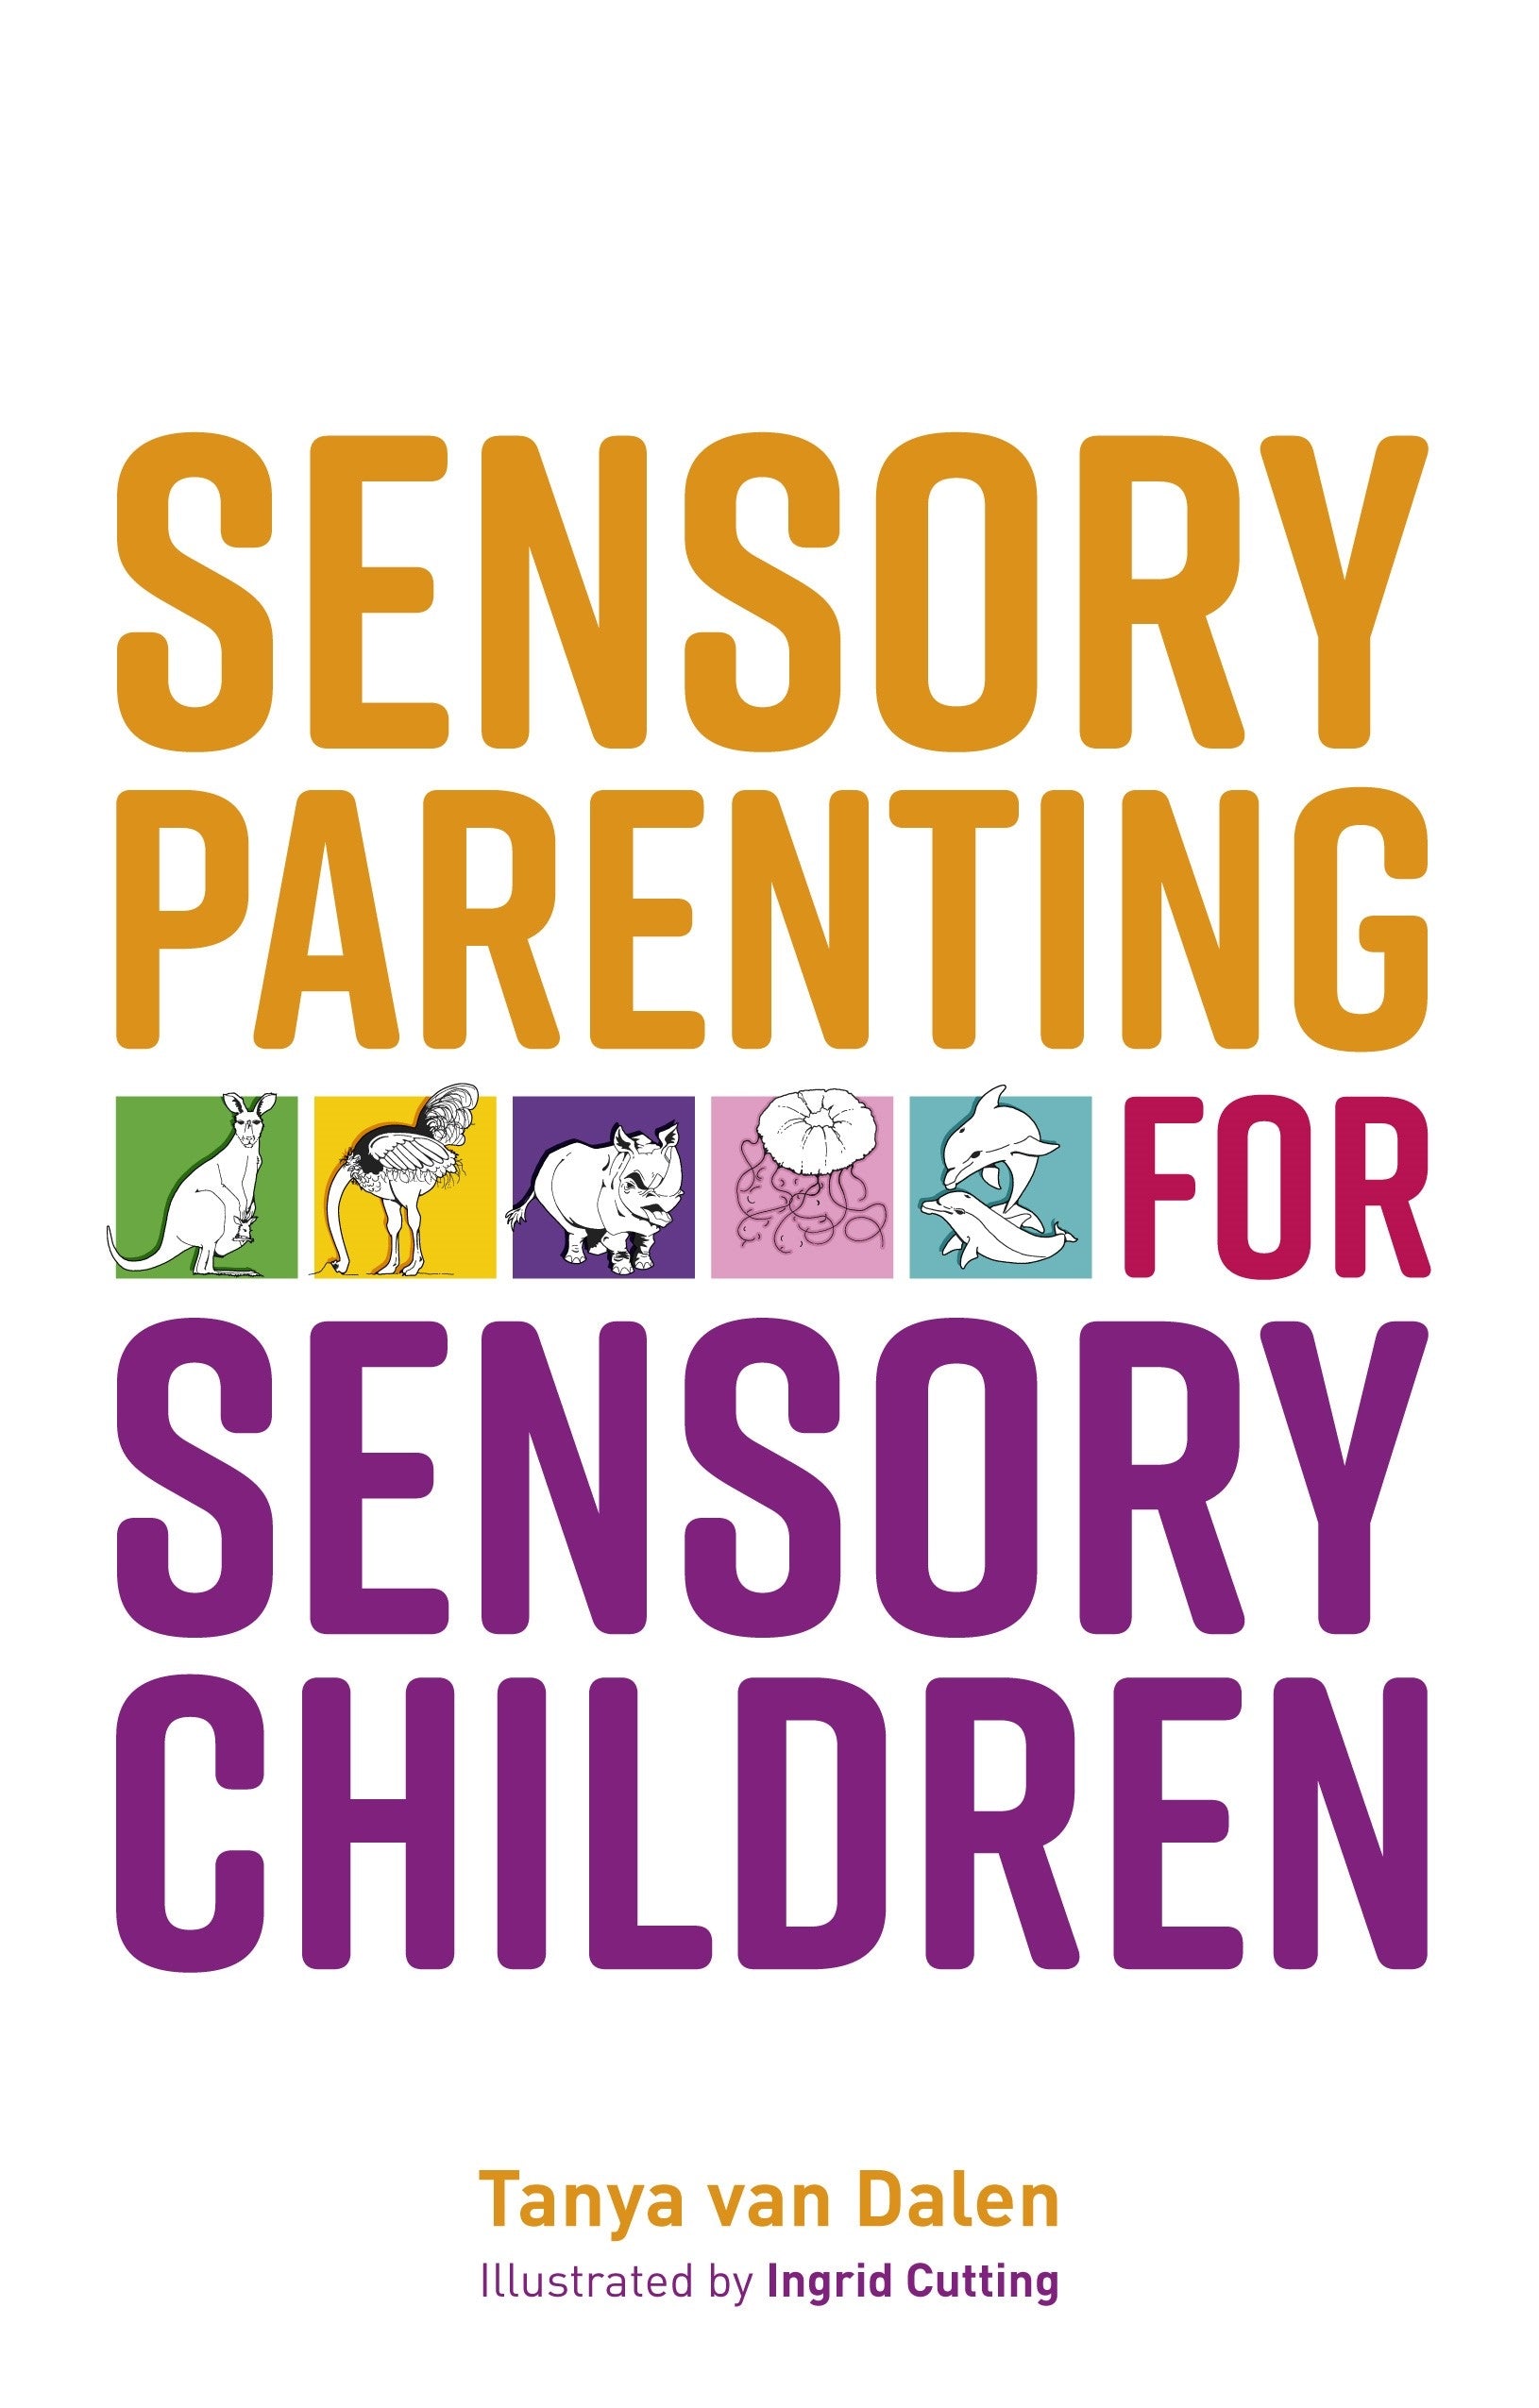 Sensory Parenting for Sensory Children by Tanya Van Dalen